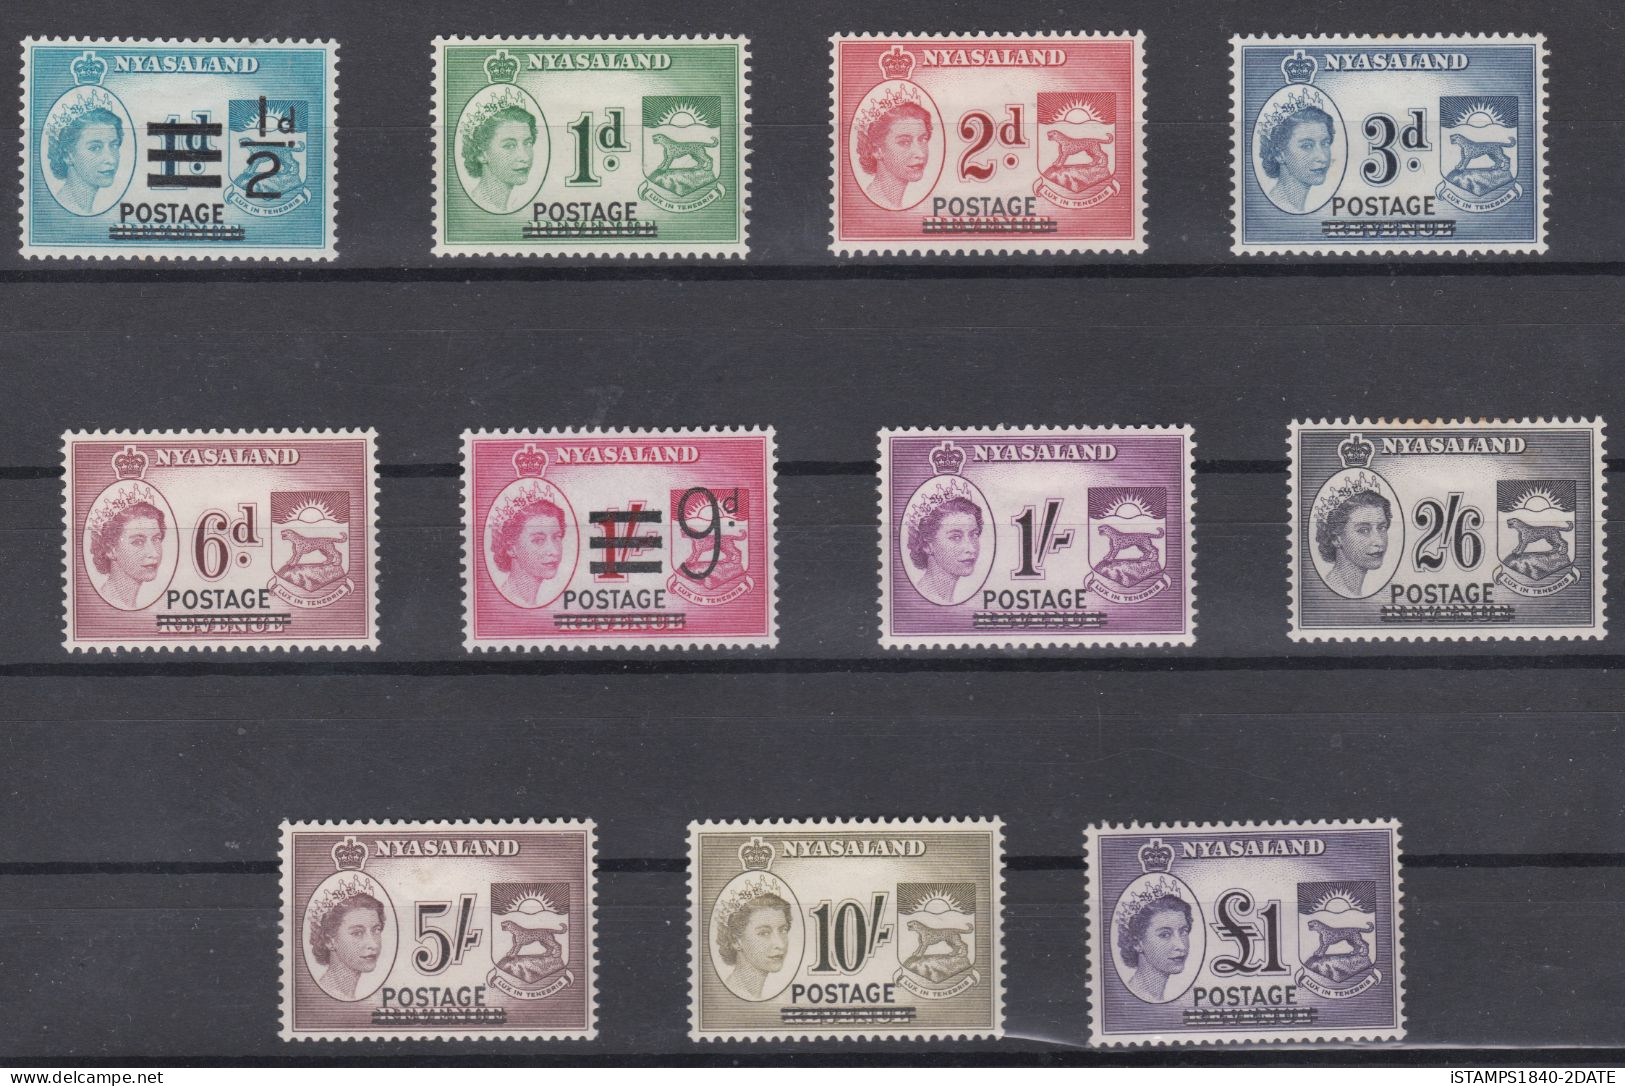 00920/ Nyasaland 1963 Sg188/98 M/MINT Set Of 11 Revenue Stamps Optd POSTAGE Cv £20+ - Rodesia & Nyasaland (1954-1963)